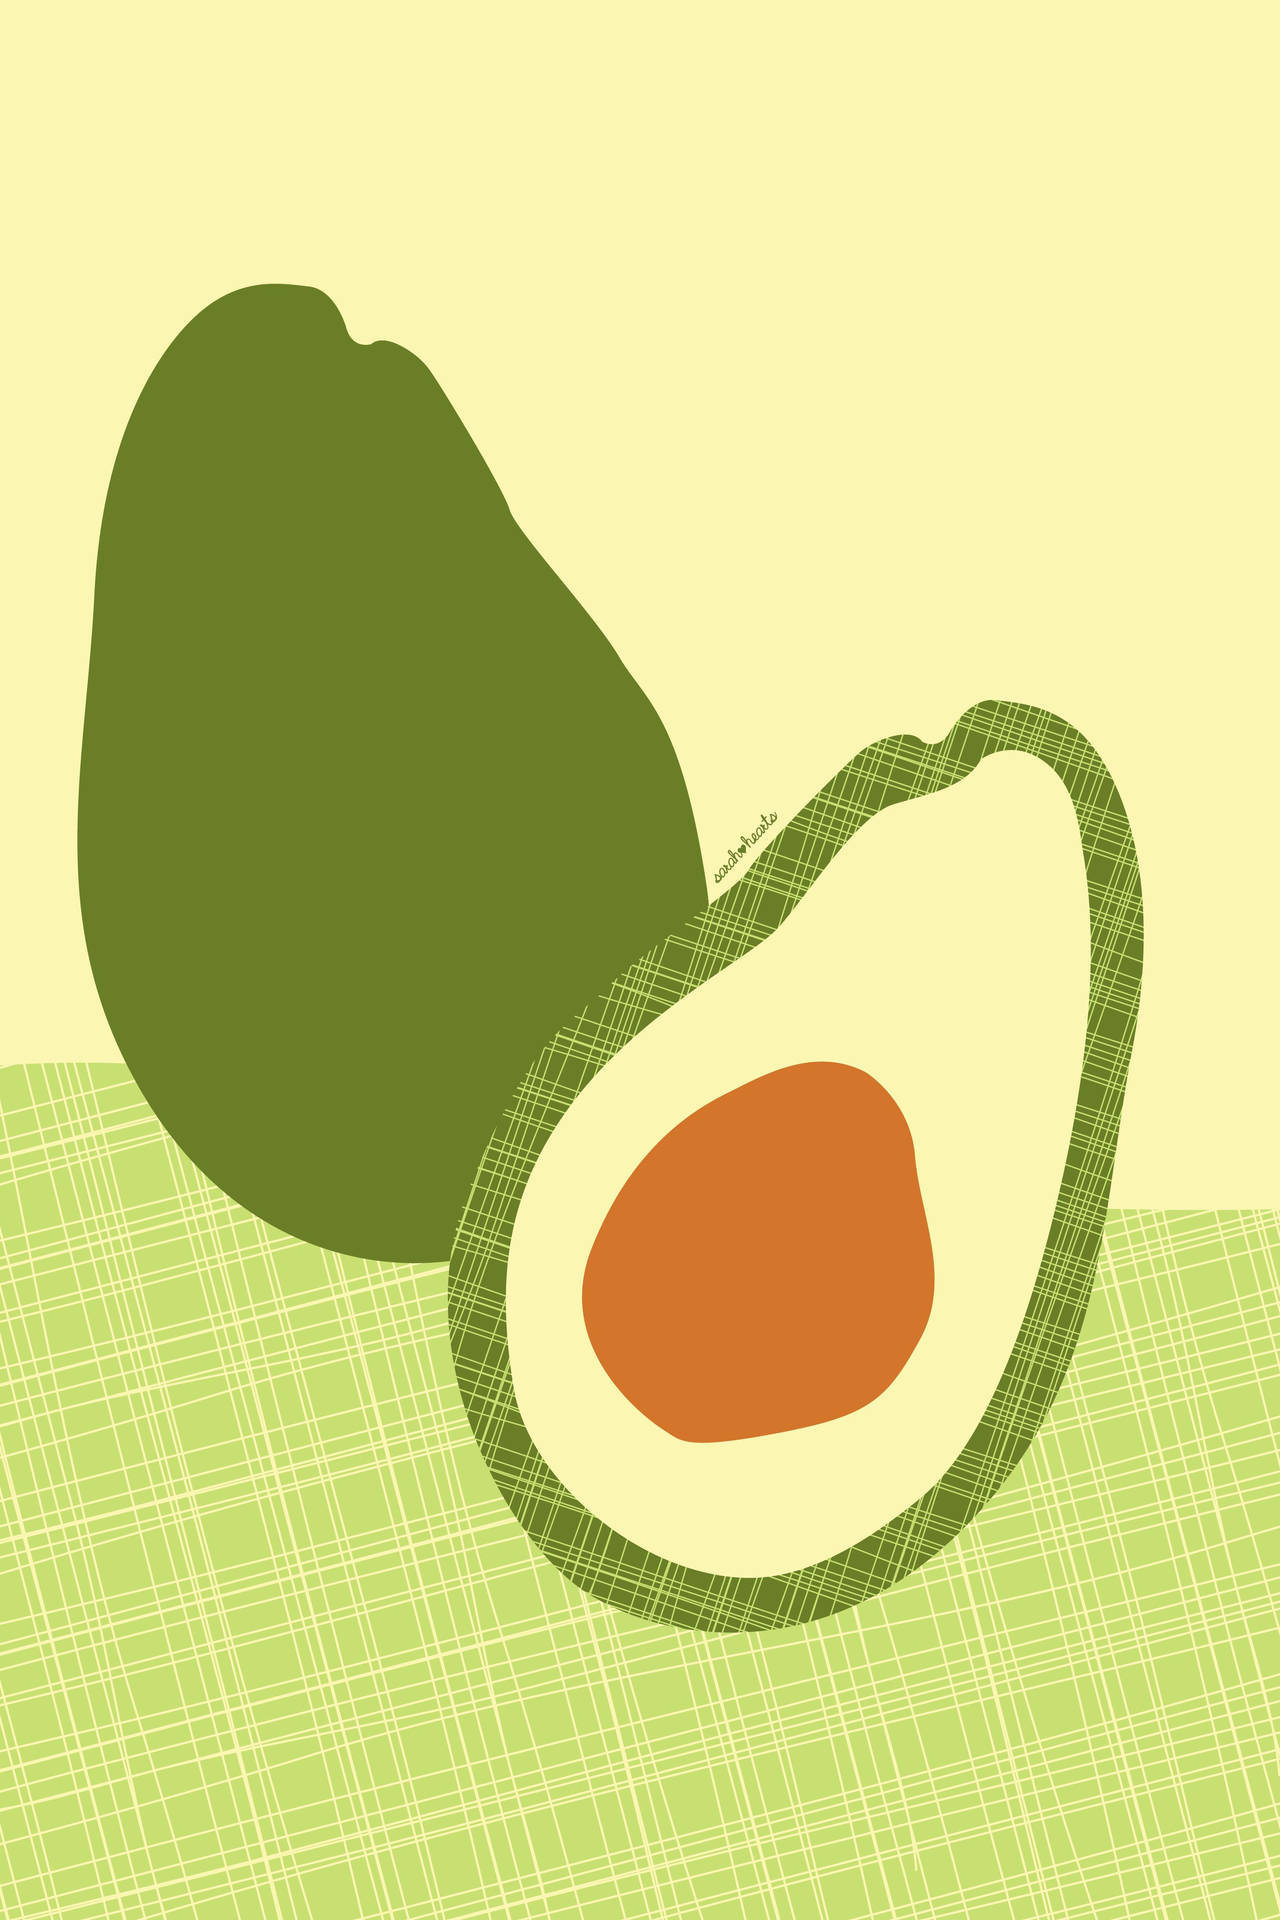 Pastel Themed Avocado Fruit Digital Artwork Picture